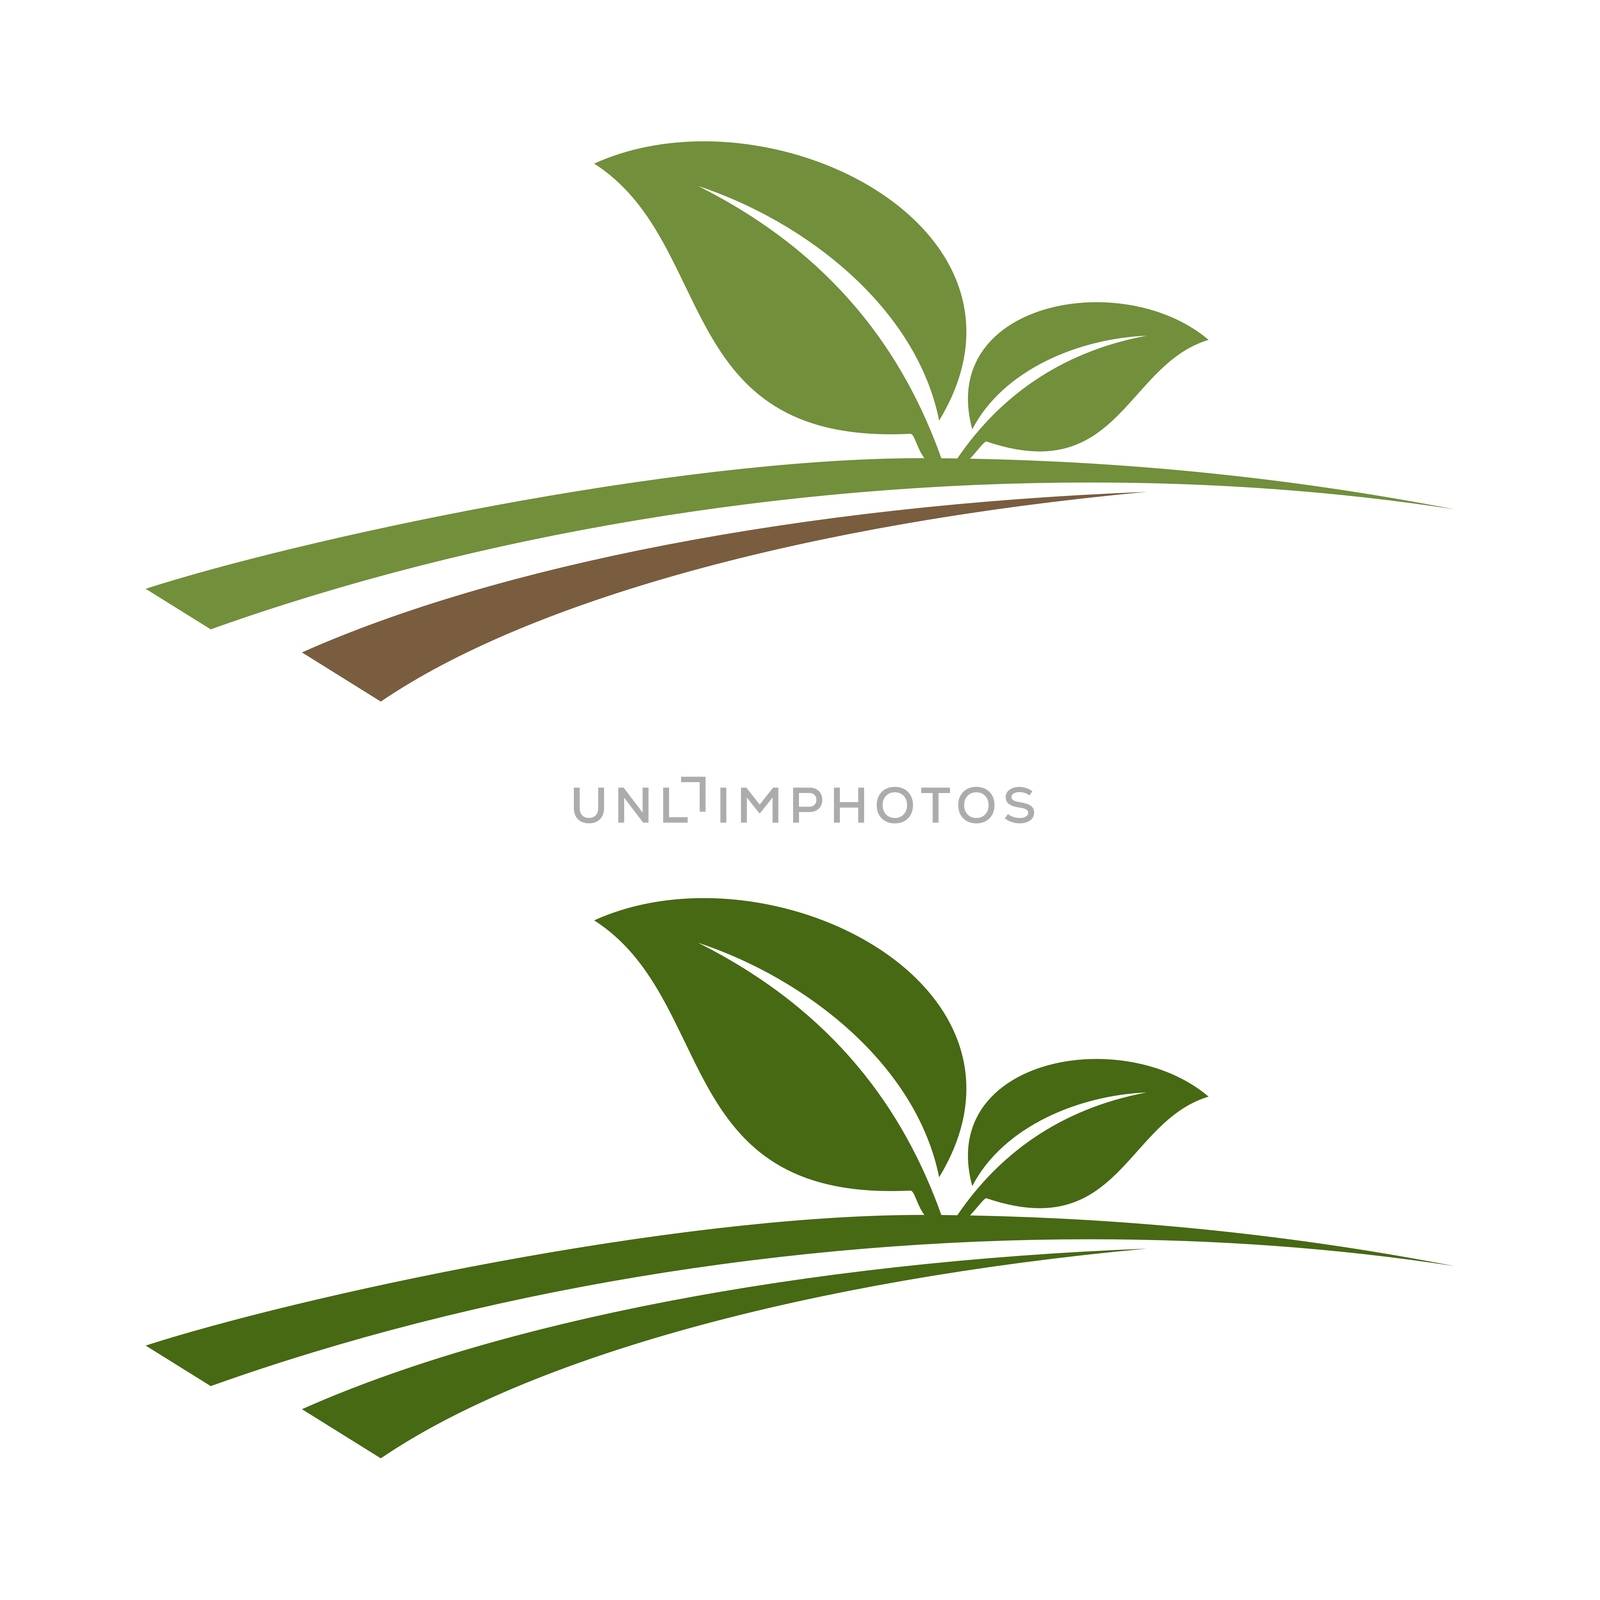 Green Leaf Growth Logo Template Illustration Design. Vector EPS 10. by soponyono1